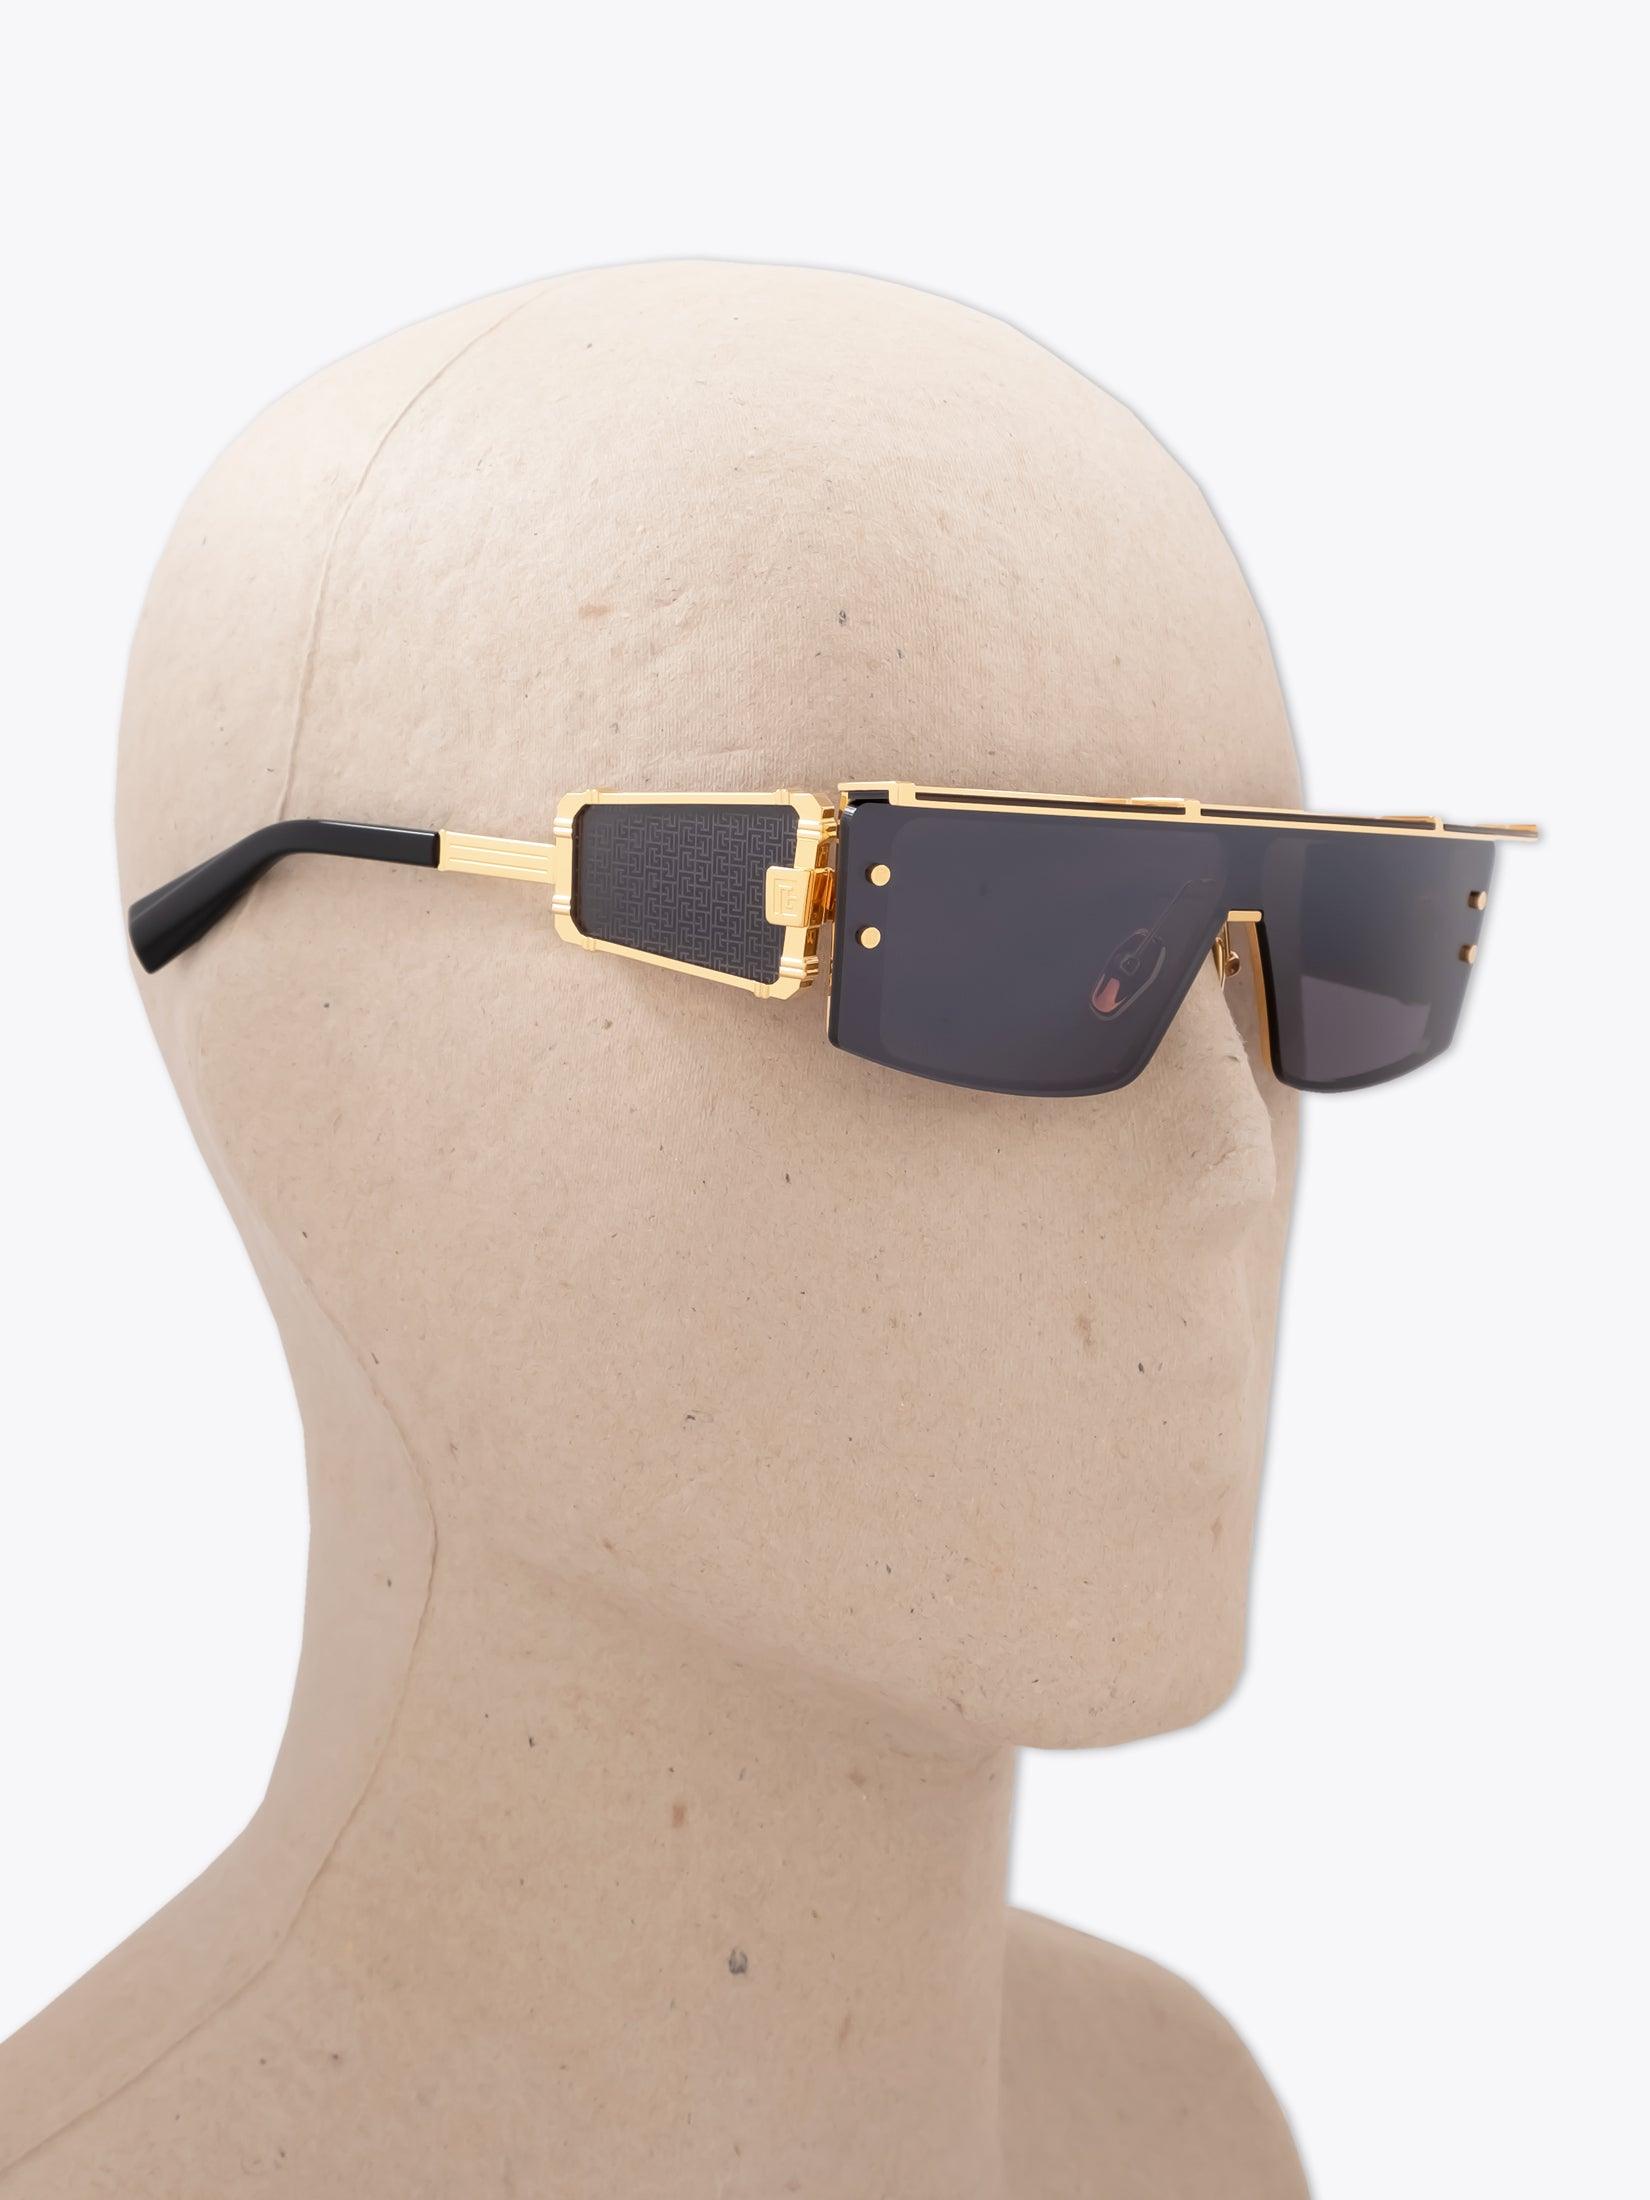 BALMAIN Wonder Boy III Gold/Black Sunglasses